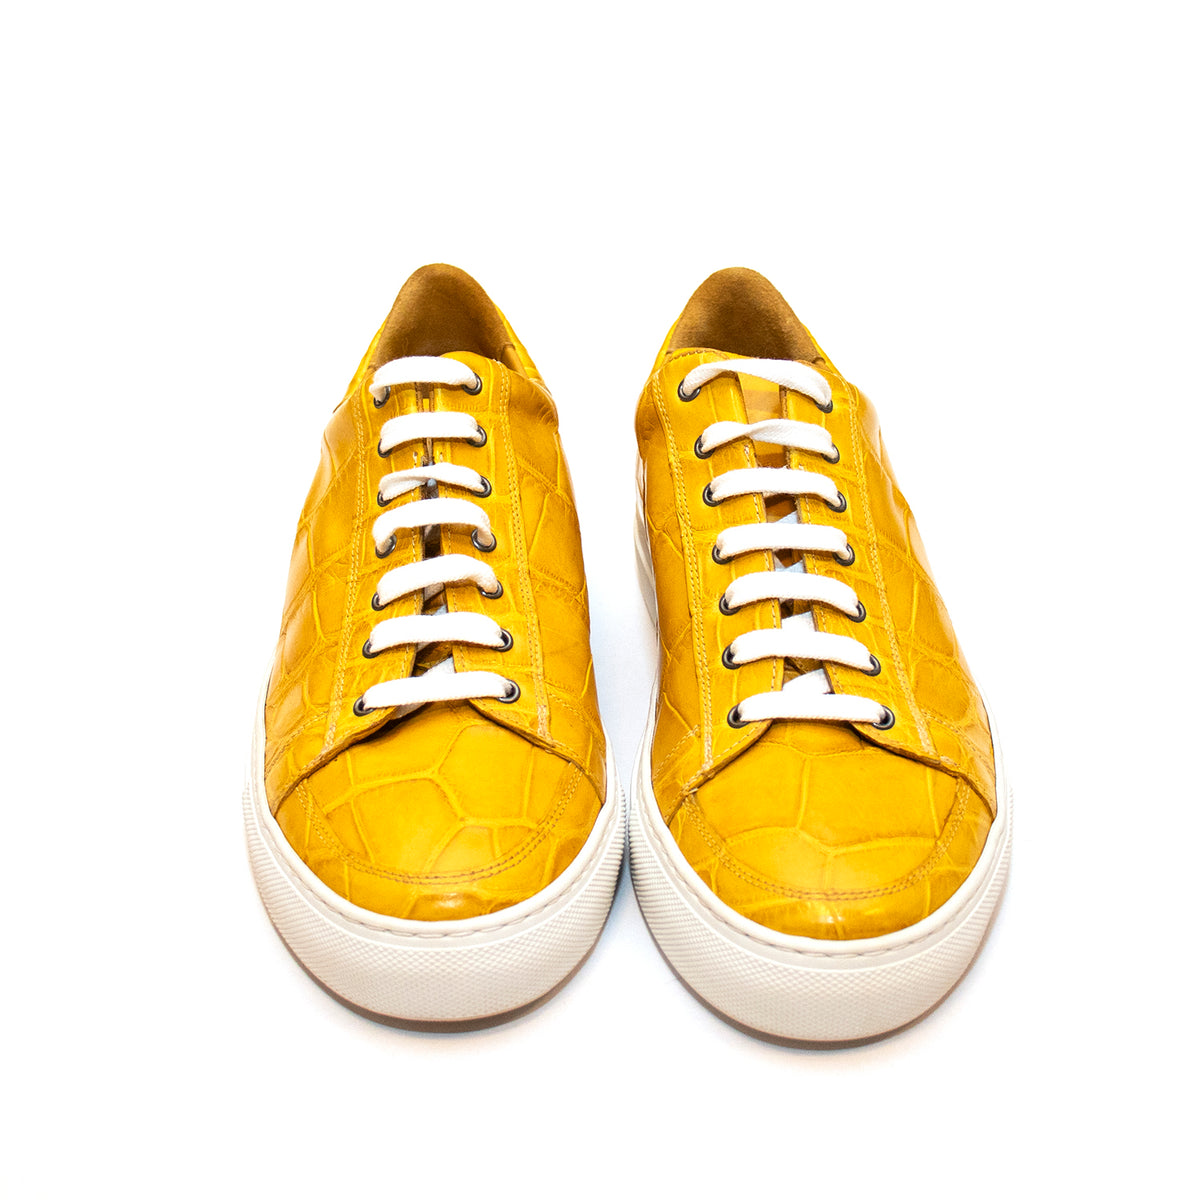 New York Yellow Sneakers